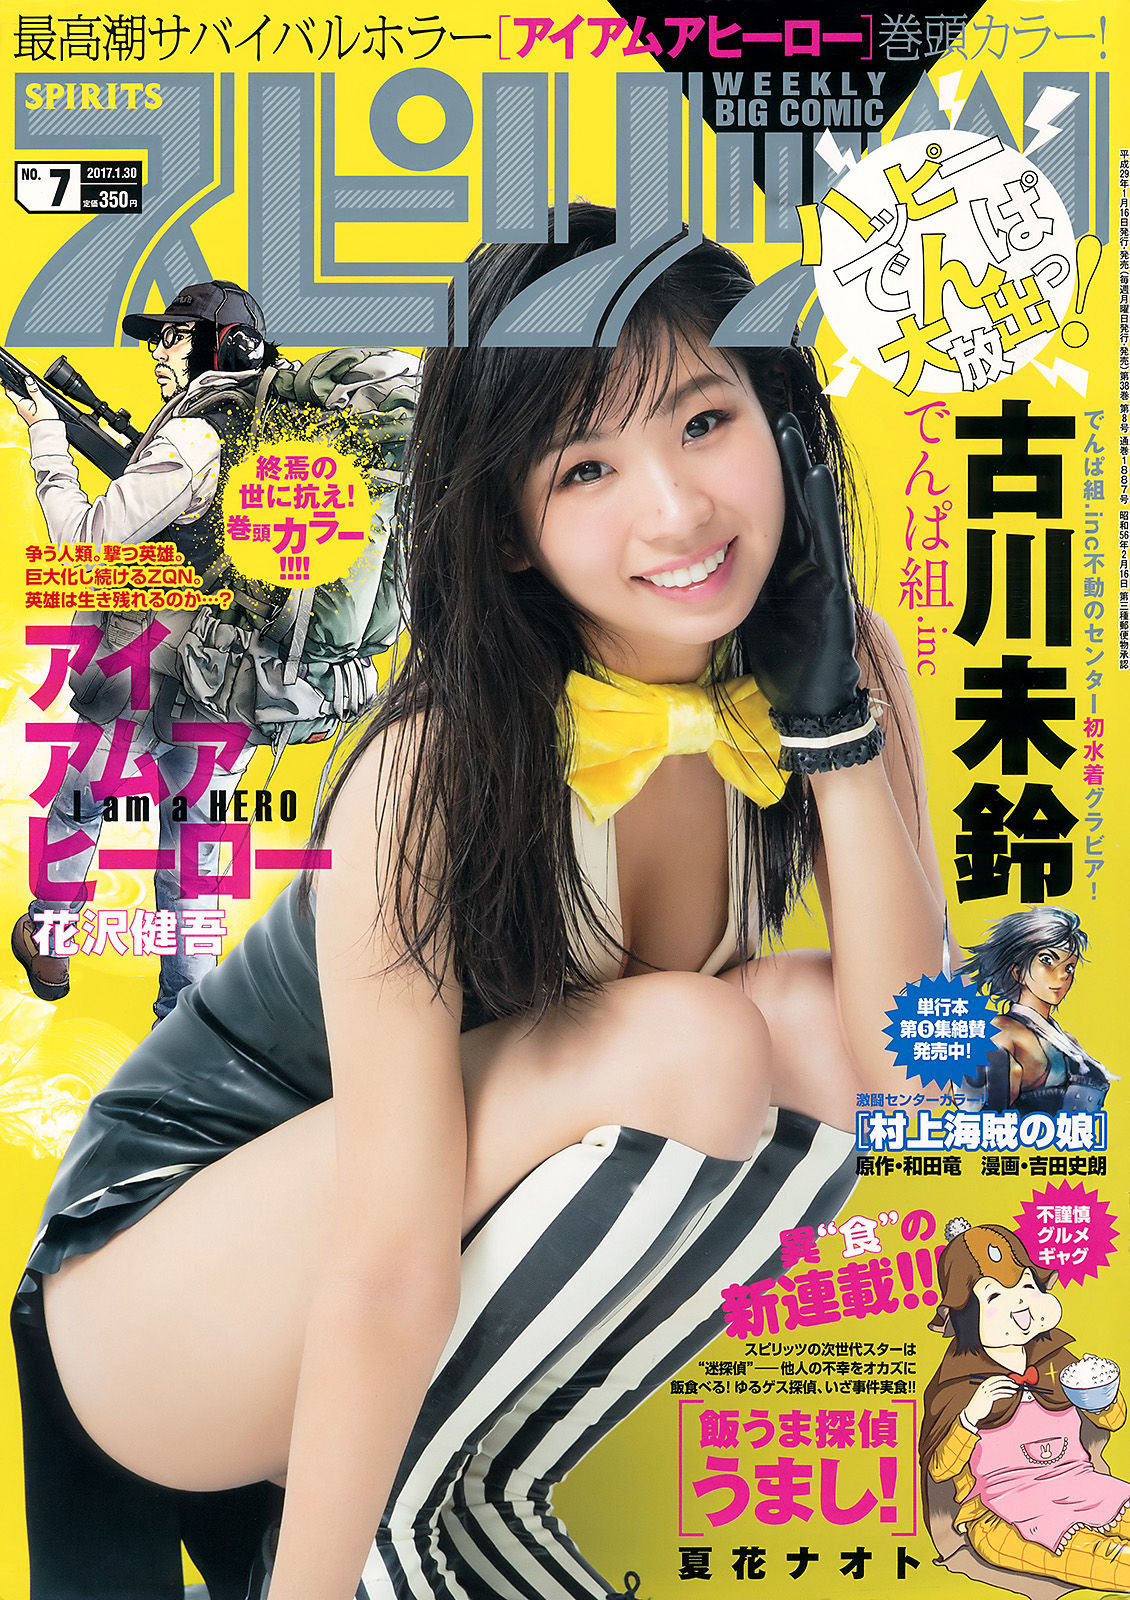 [Weekly Big Comic Spirits]日本少女:古川未铃无圣光私房照片在线浏览(8P)